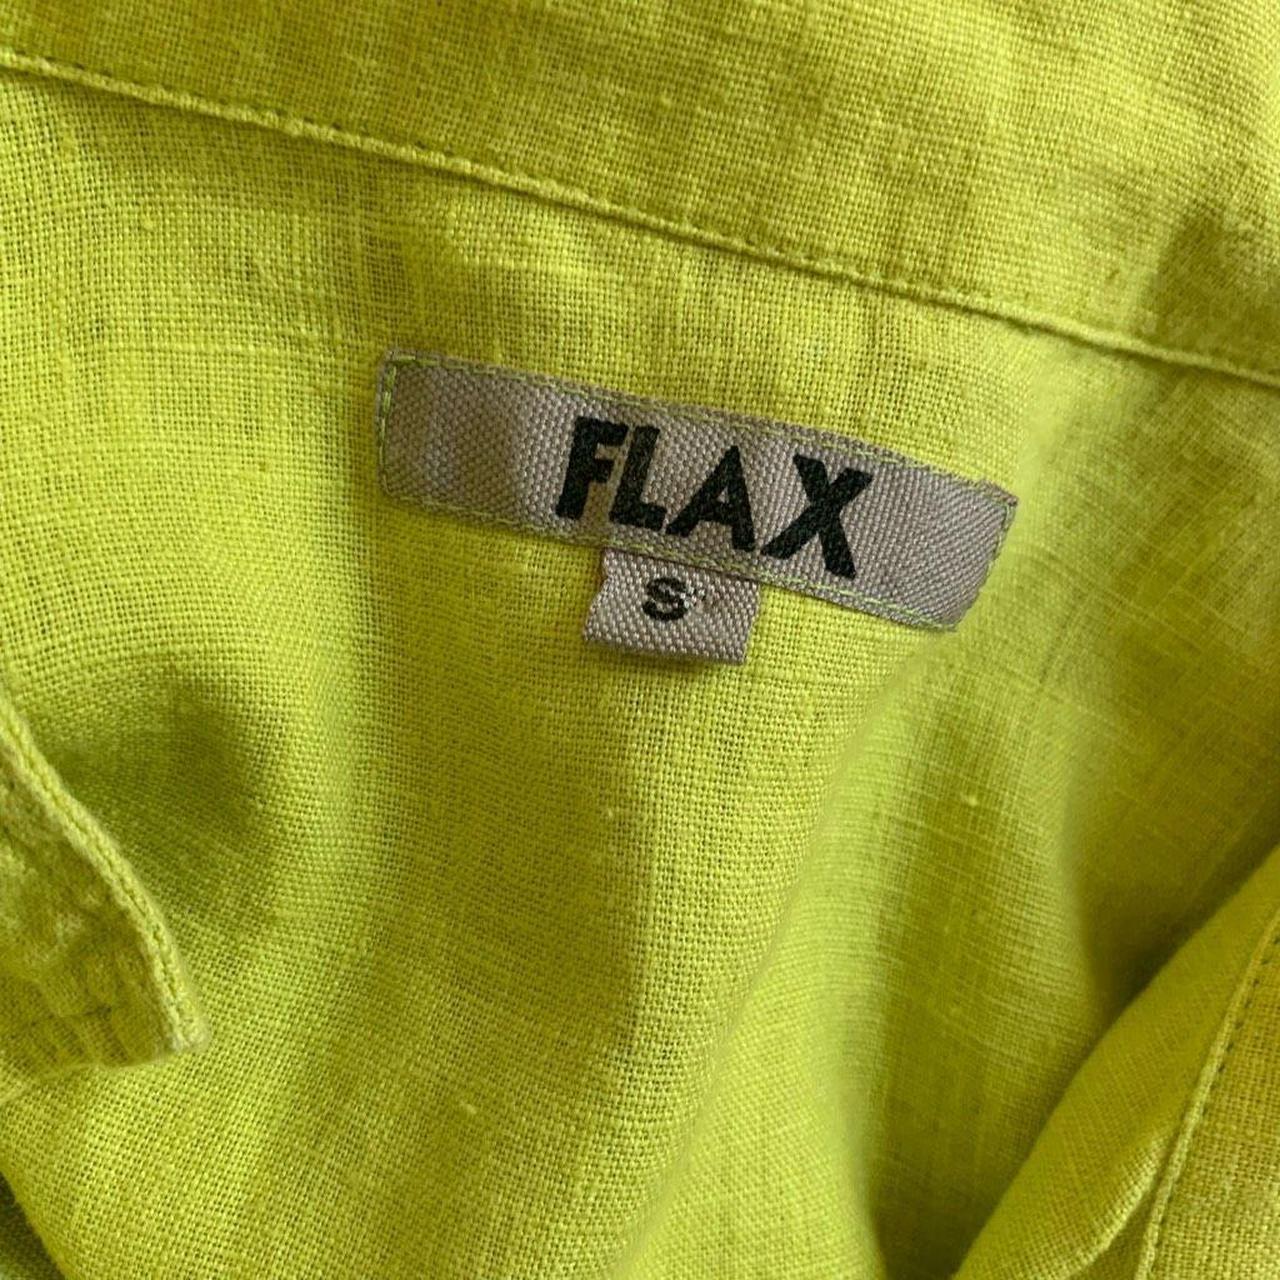  Flax Brand Clothing